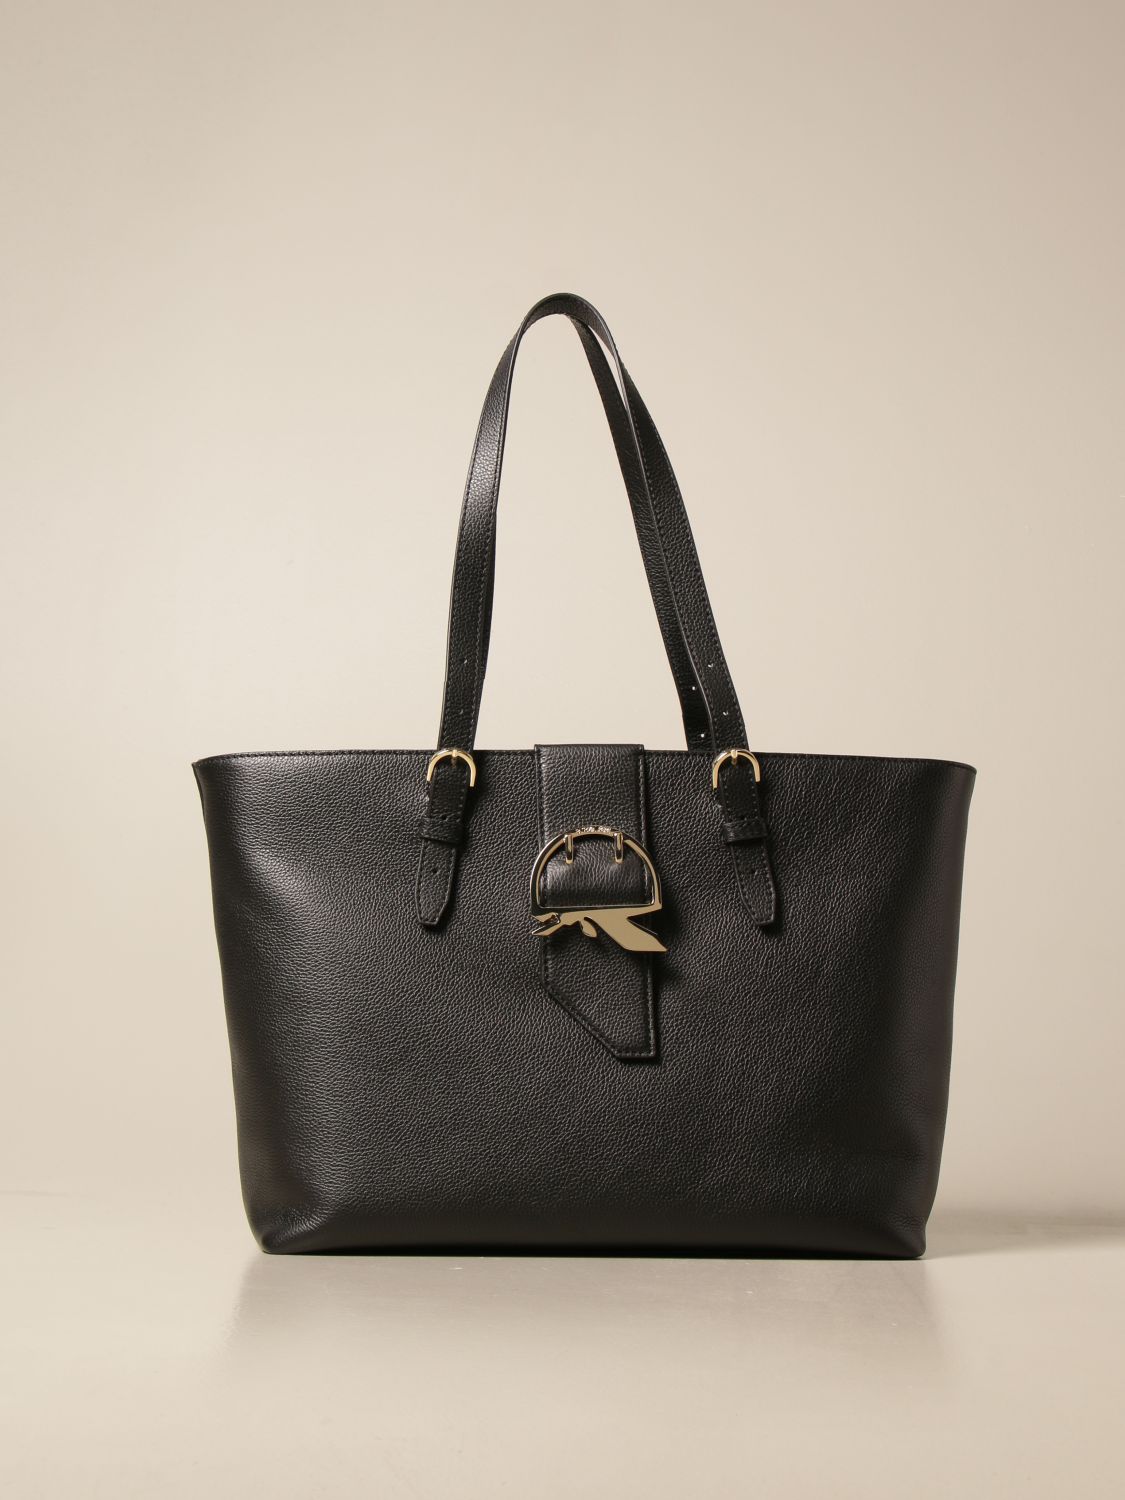 Patrizia Pepe Outlet: handbag for woman - Black | Patrizia Pepe handbag ...